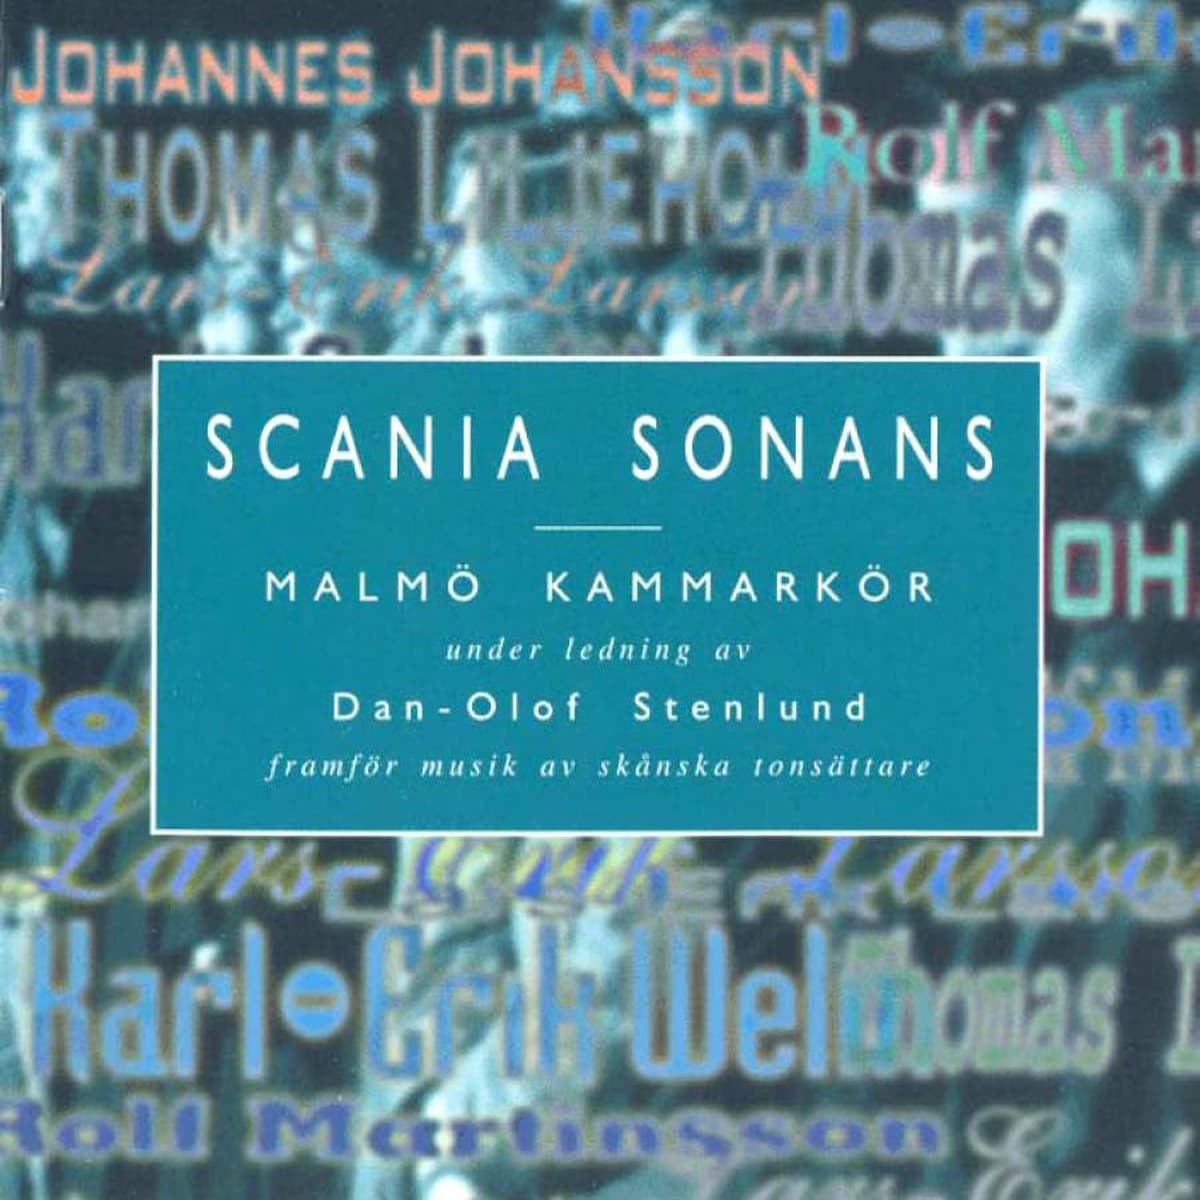 Record cover artwork for Scania Sonans